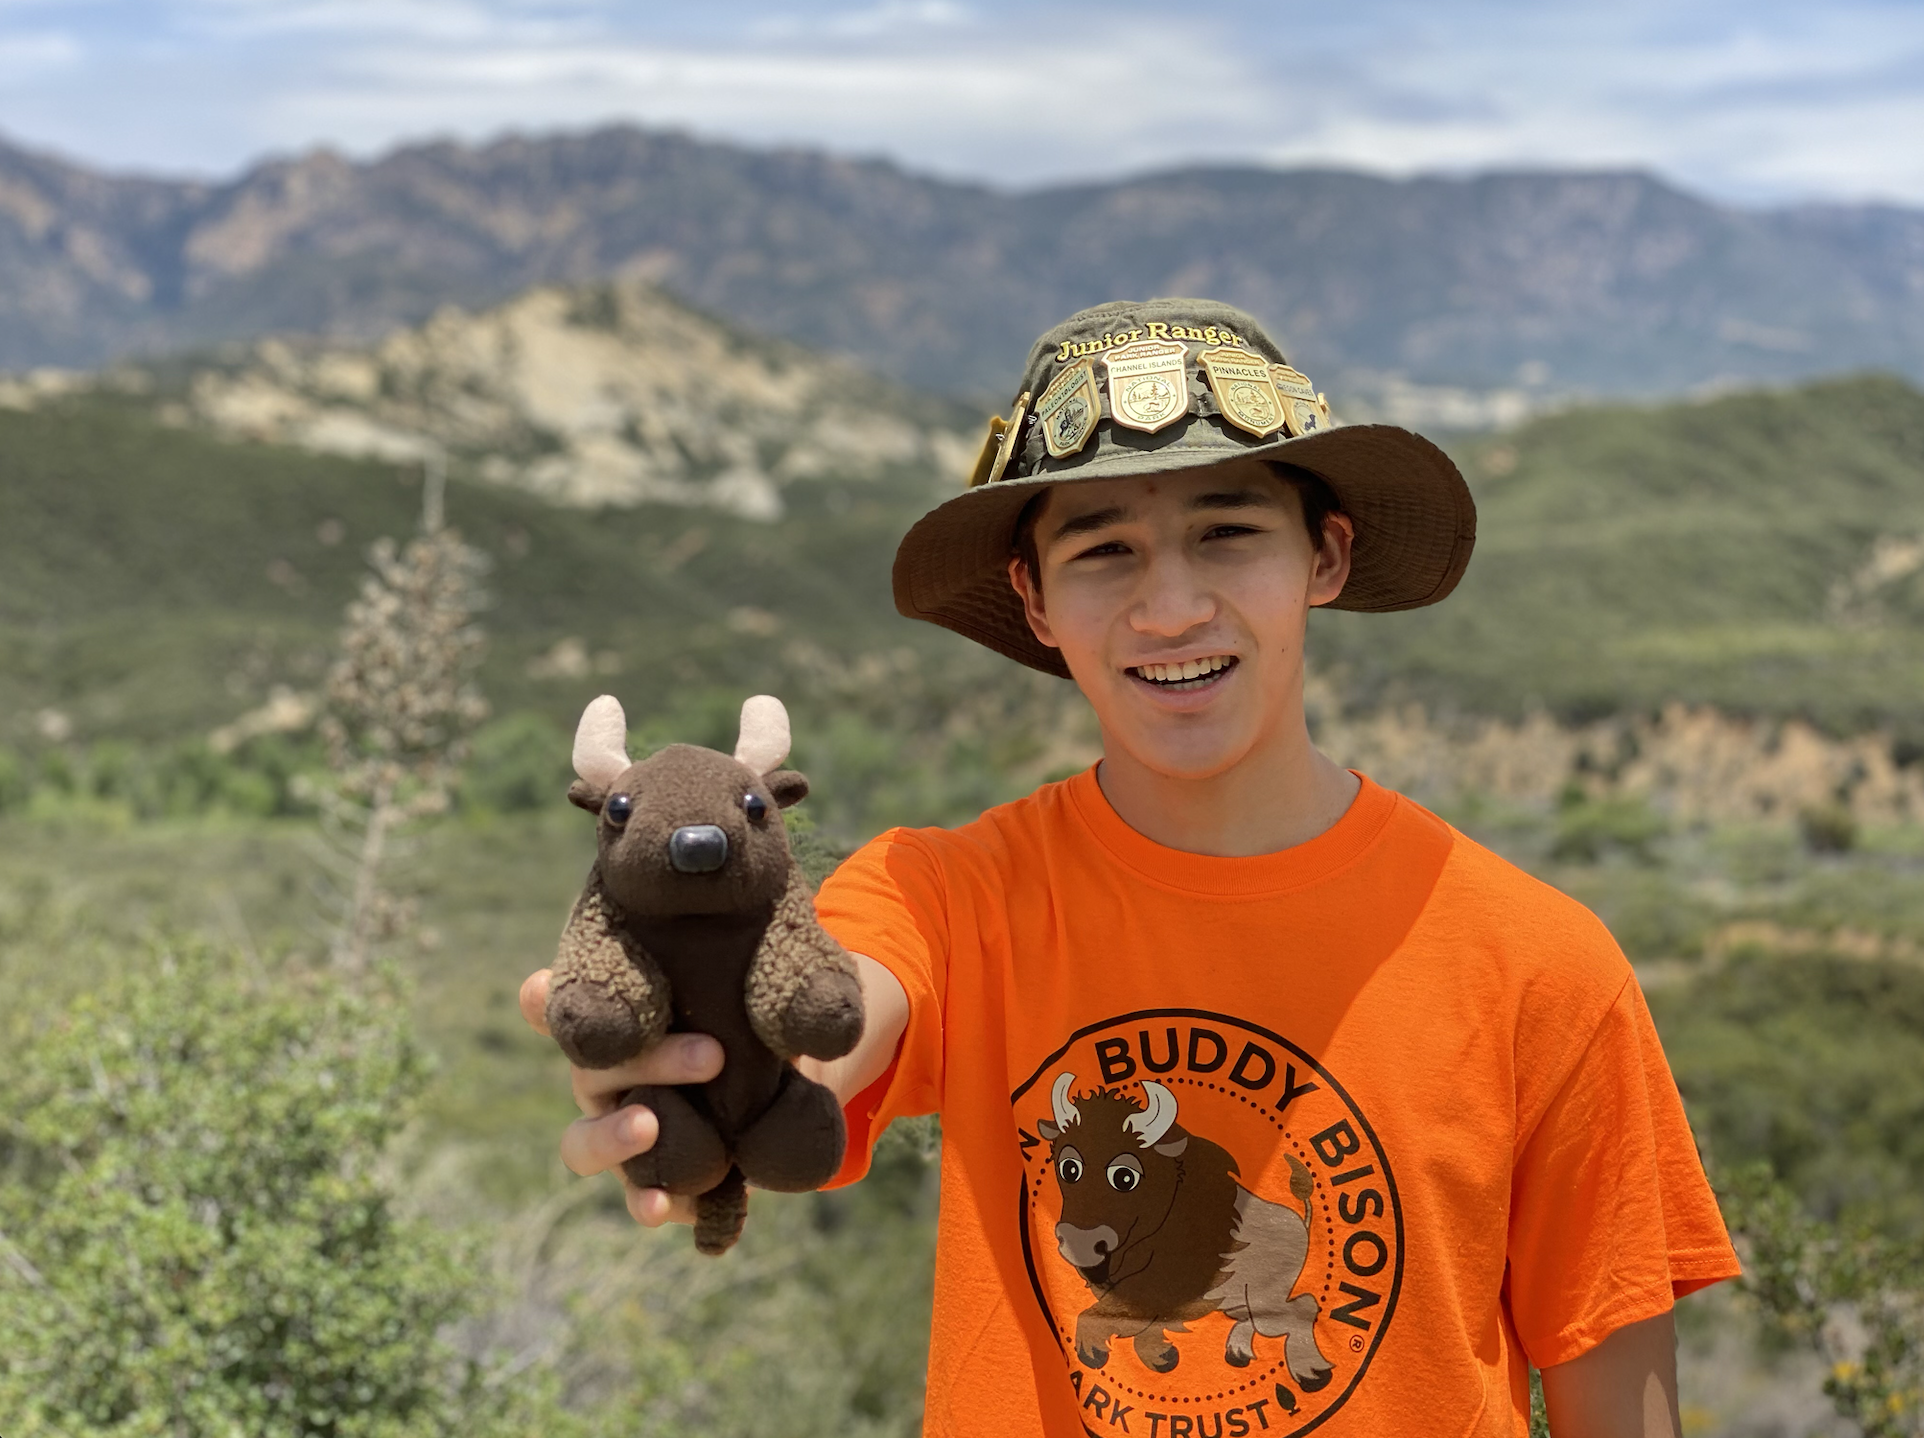 Junior Ranger Tigran Nahabedian holds a small stuffed bison while wearing an orange shirt